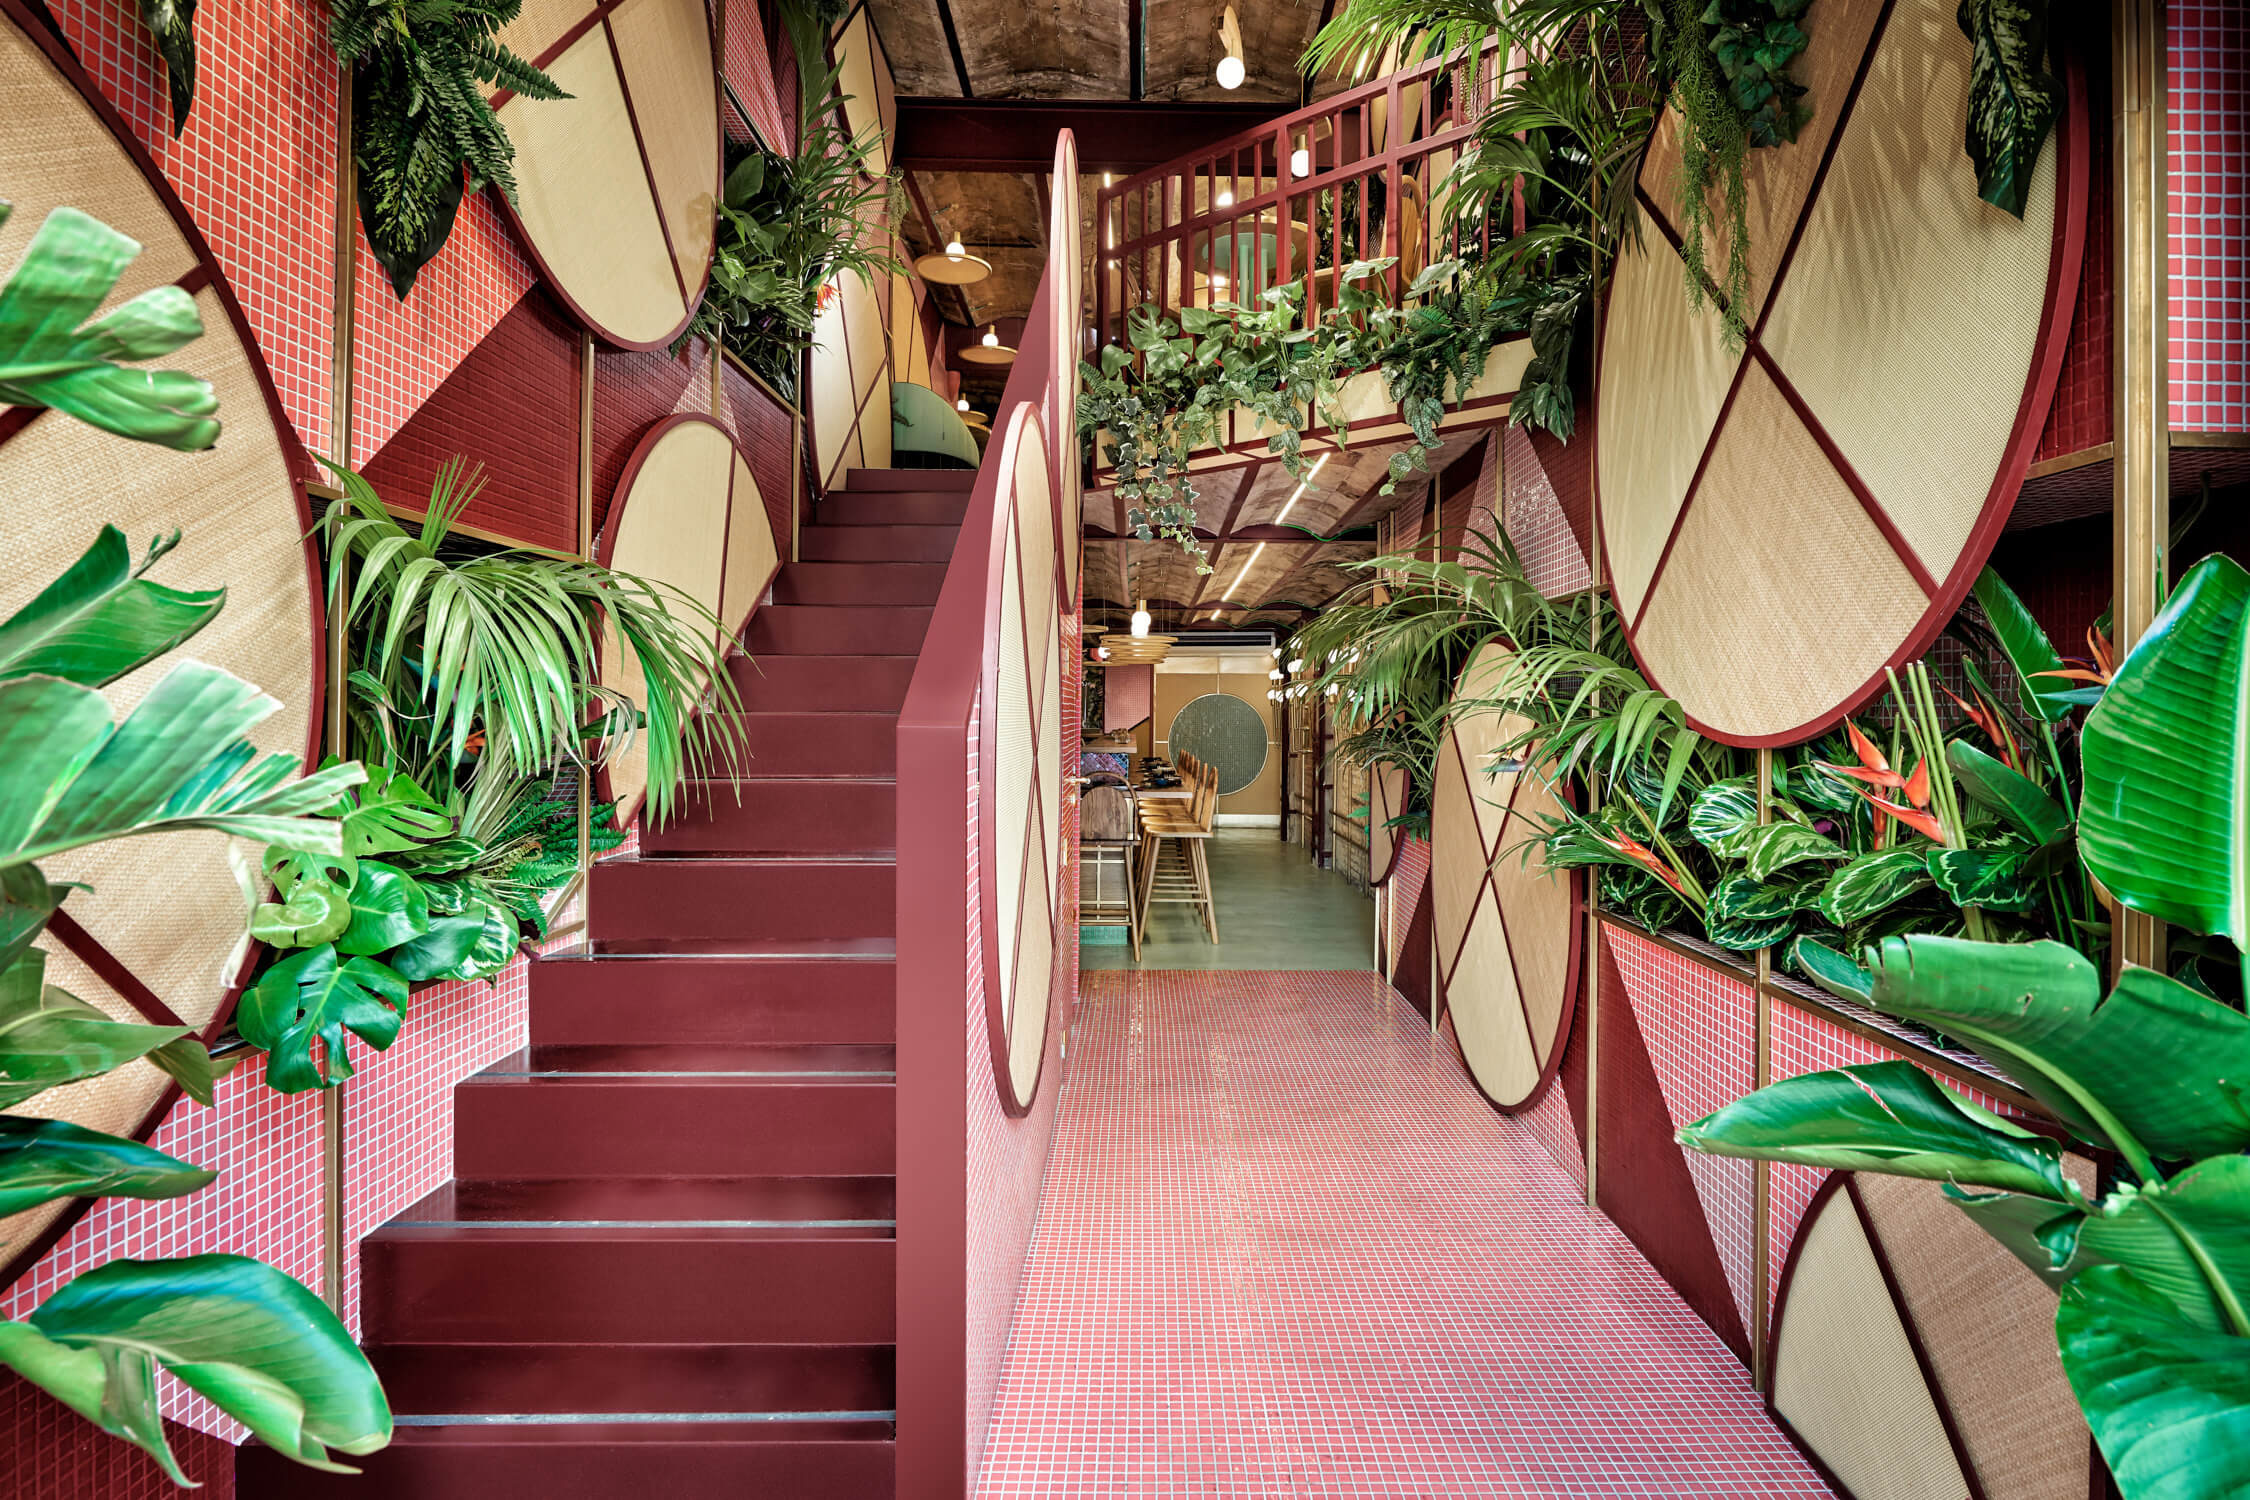 Interior of the restaurant in tropical tones